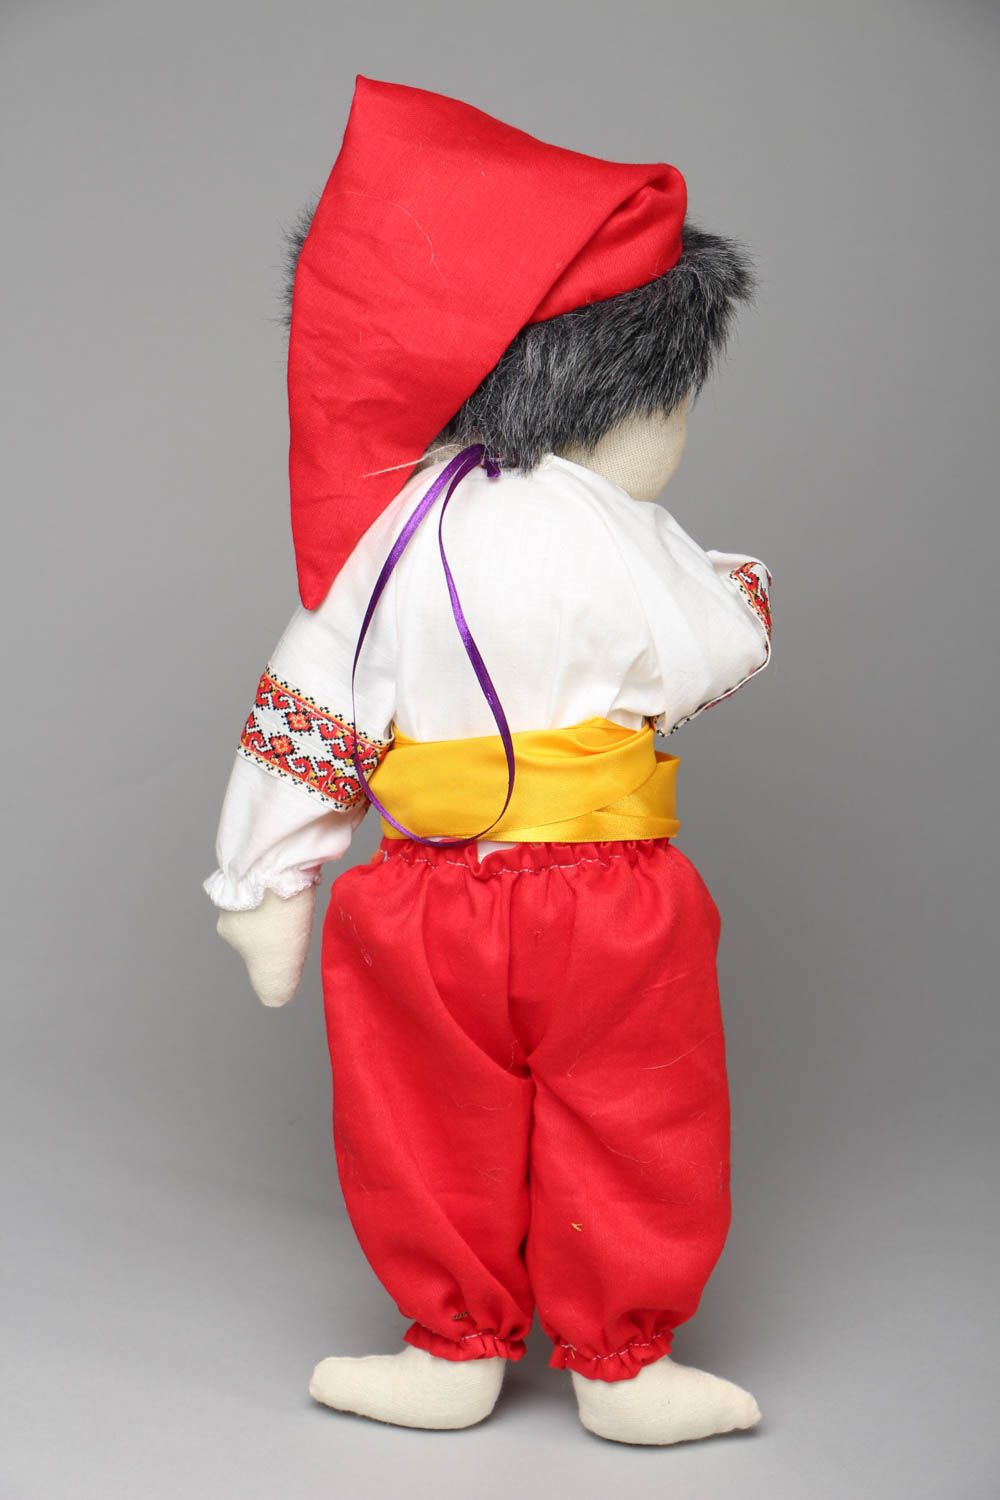 Textil Puppe Junge in Ethno Kleidung foto 3